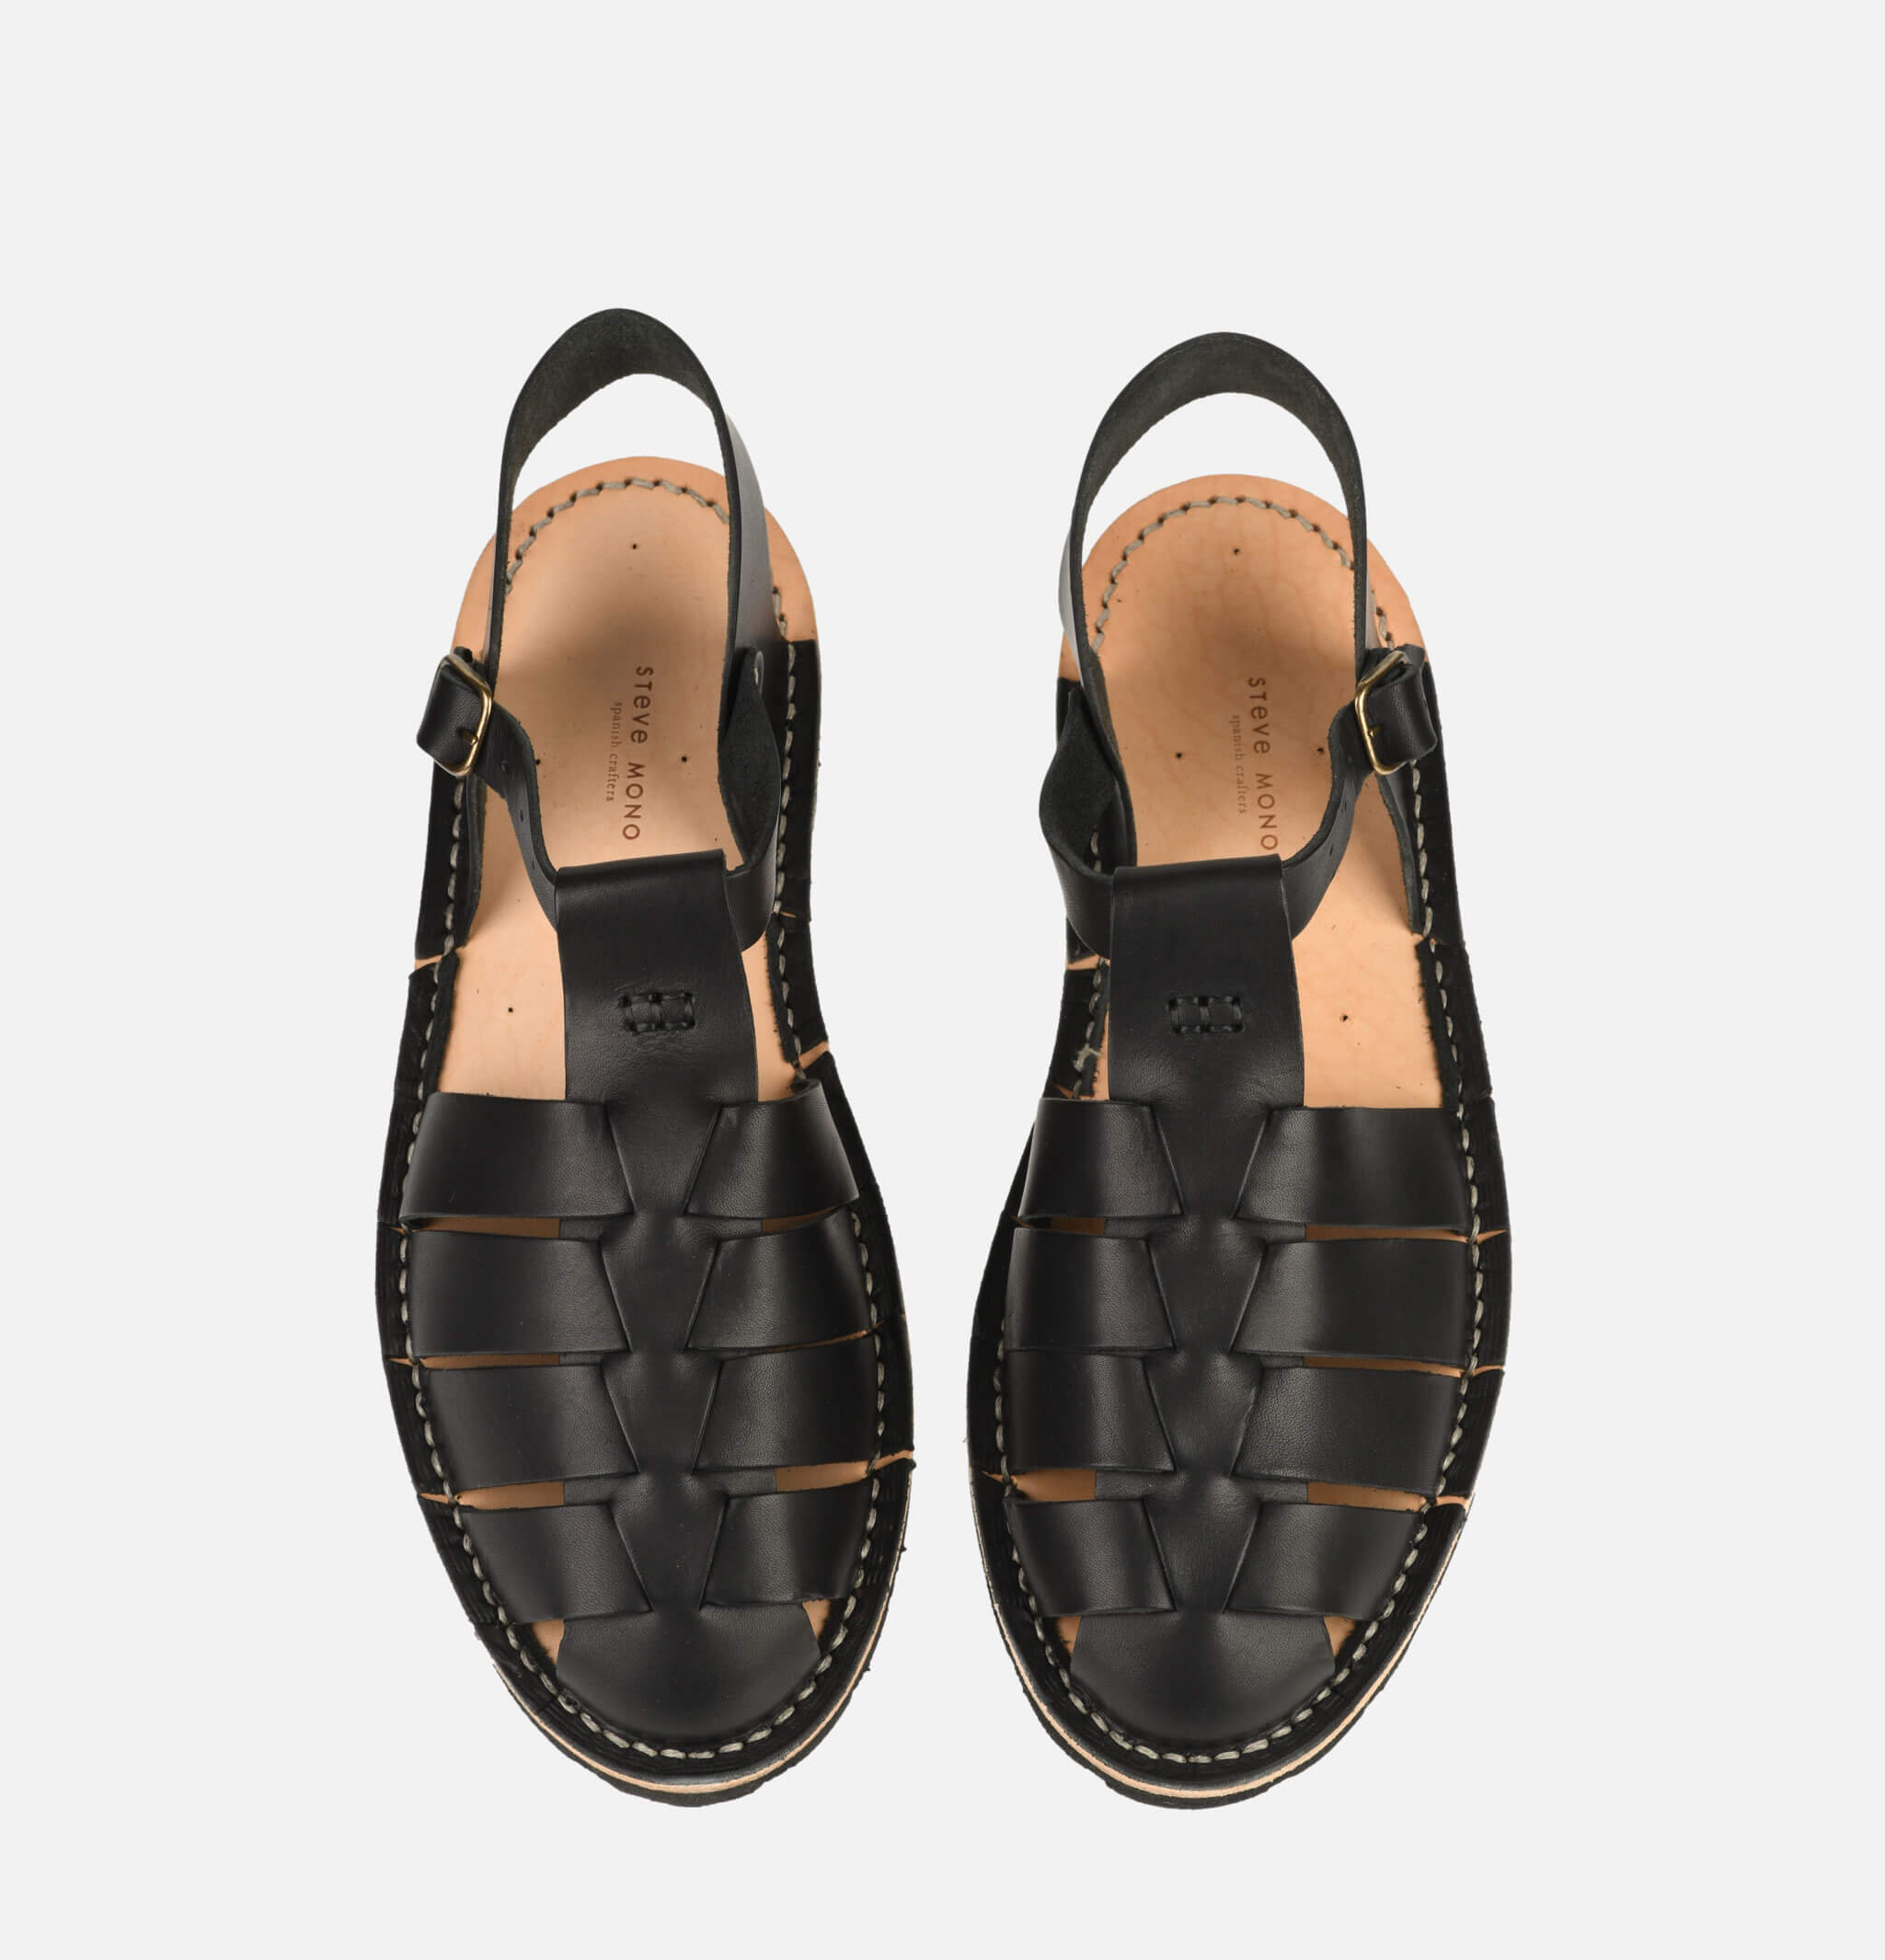 Artisanal Sandal Shoes 09 Black